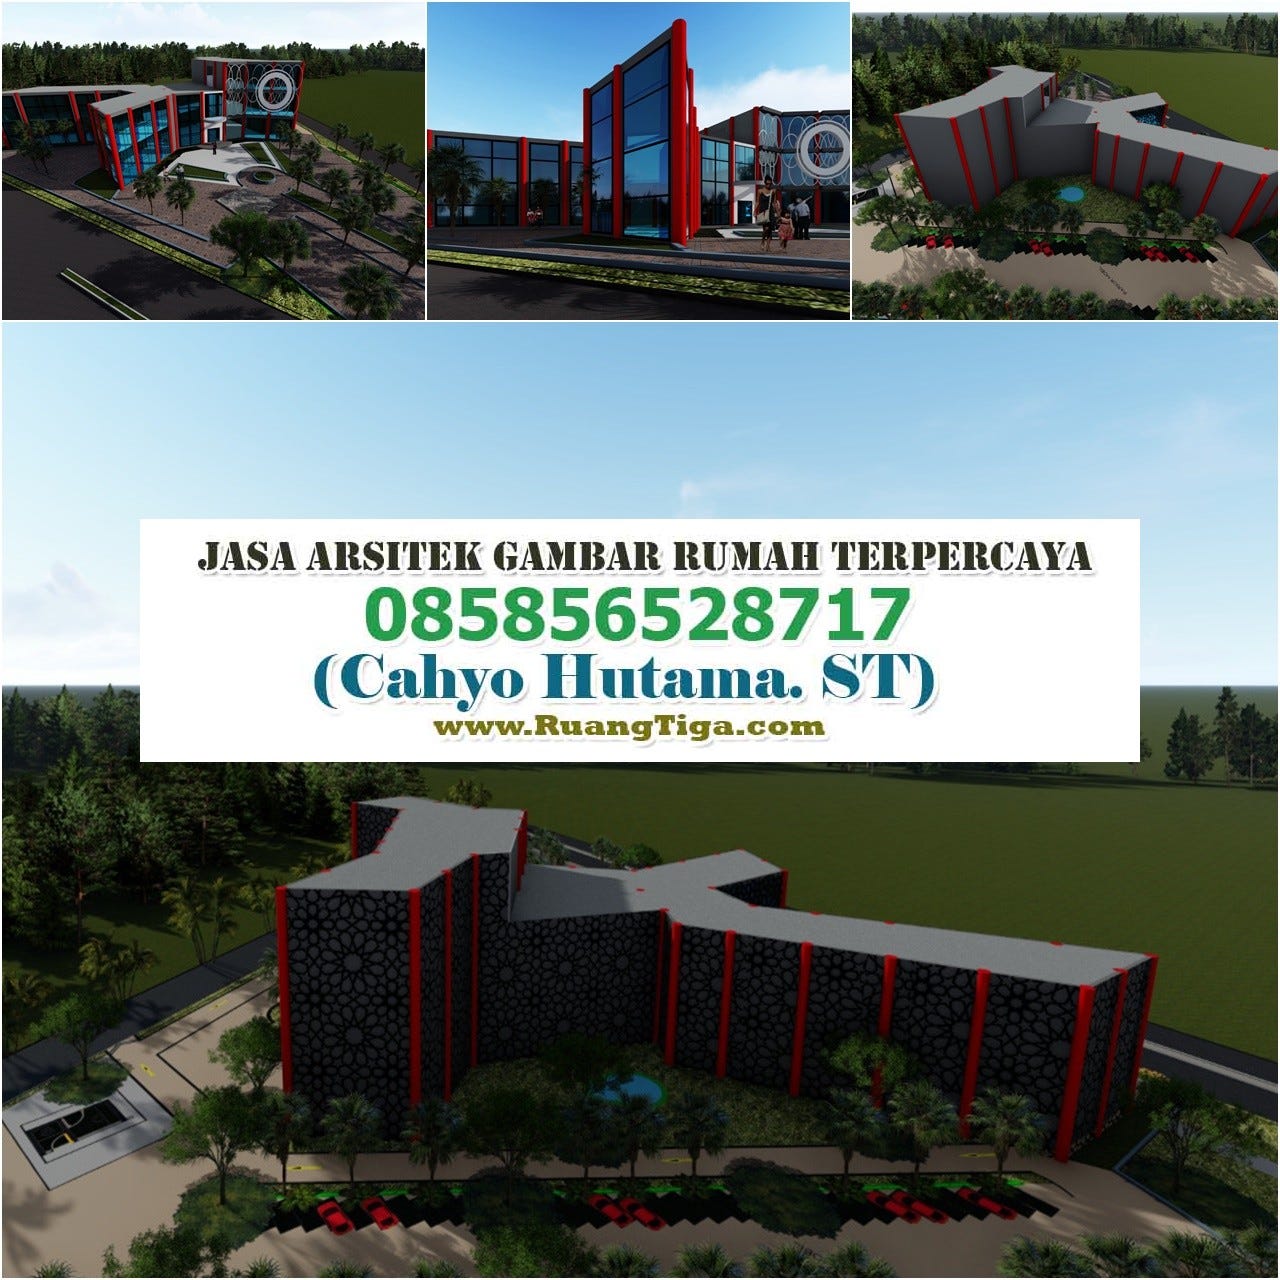 085856528717 Jasa Desain Rumah Minimalis Surabaya Jasa Desain